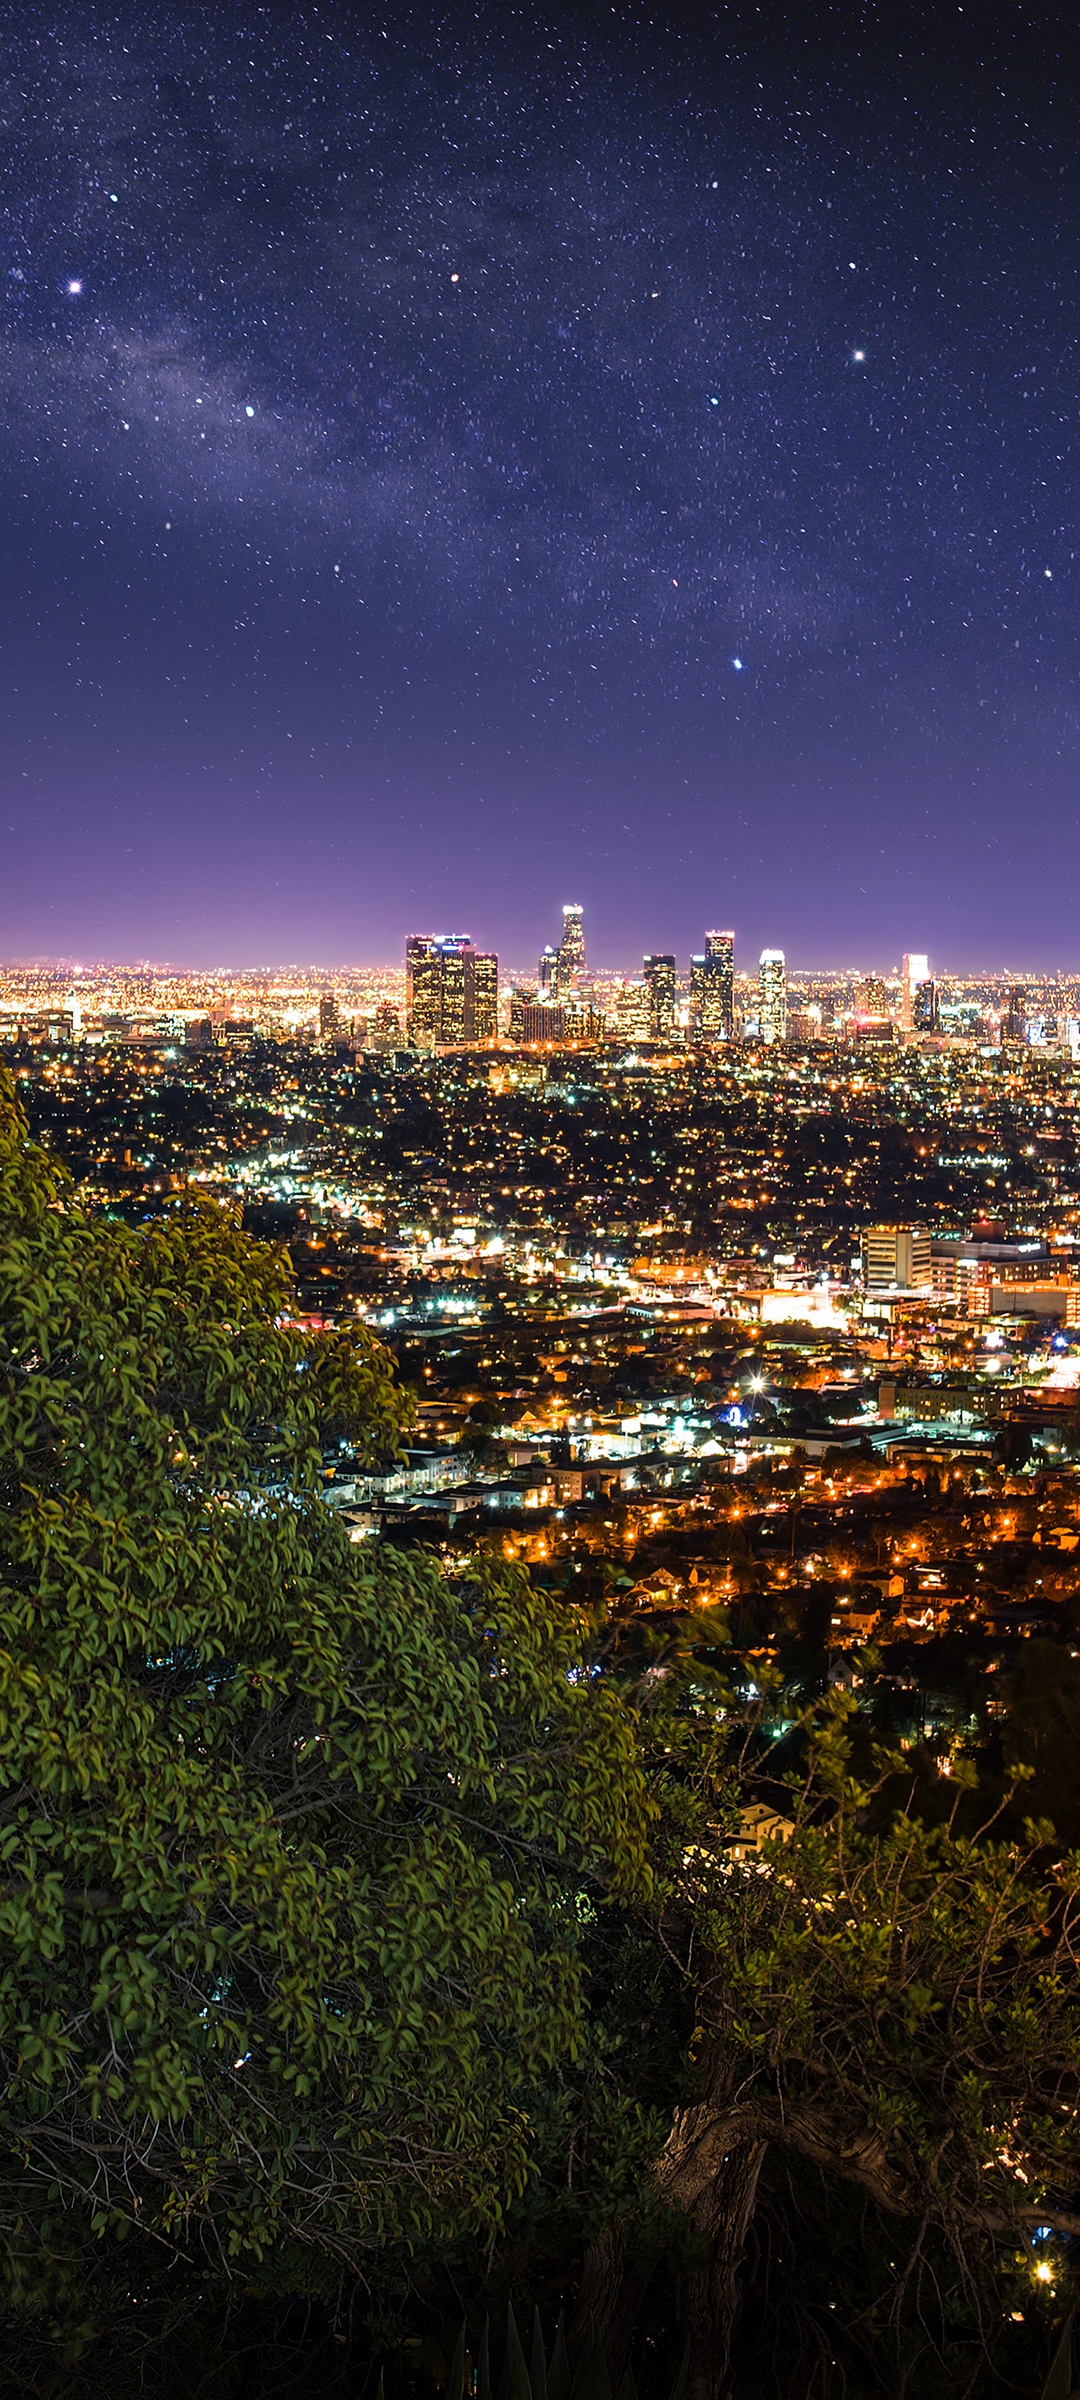 Los Angeles Wallpaper in 4k & HD - Los Angeles Dream